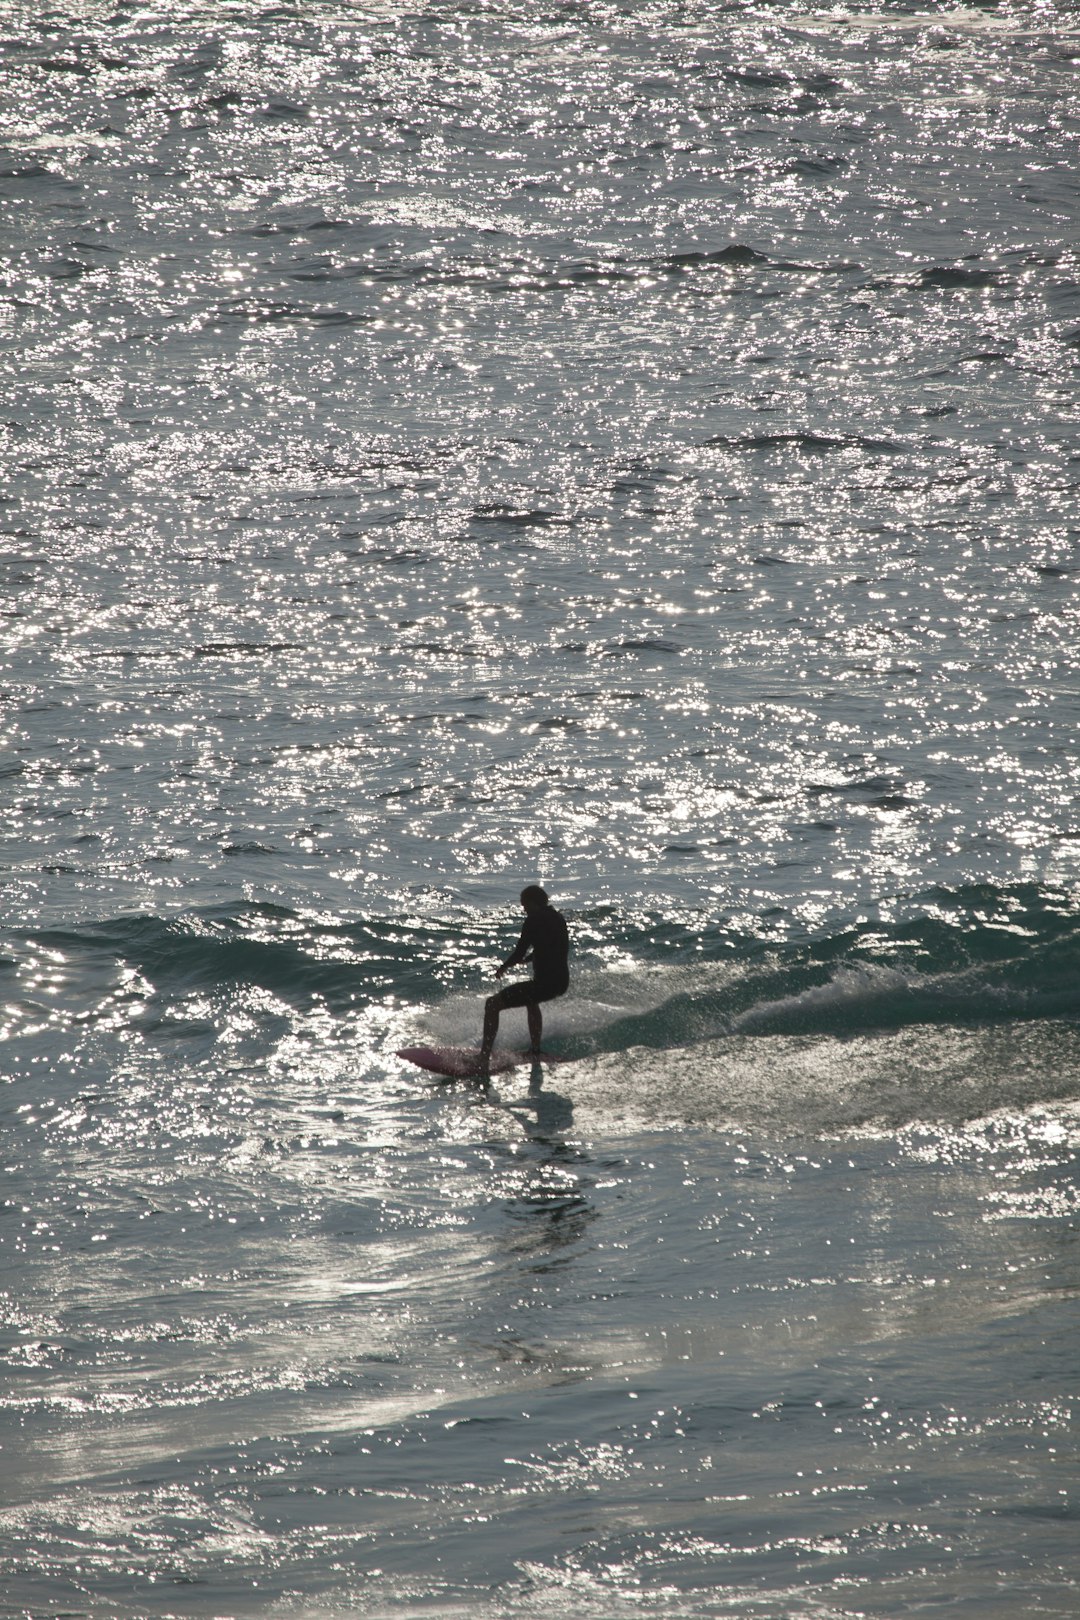 Surfing photo spot Tamarama Beach Broome